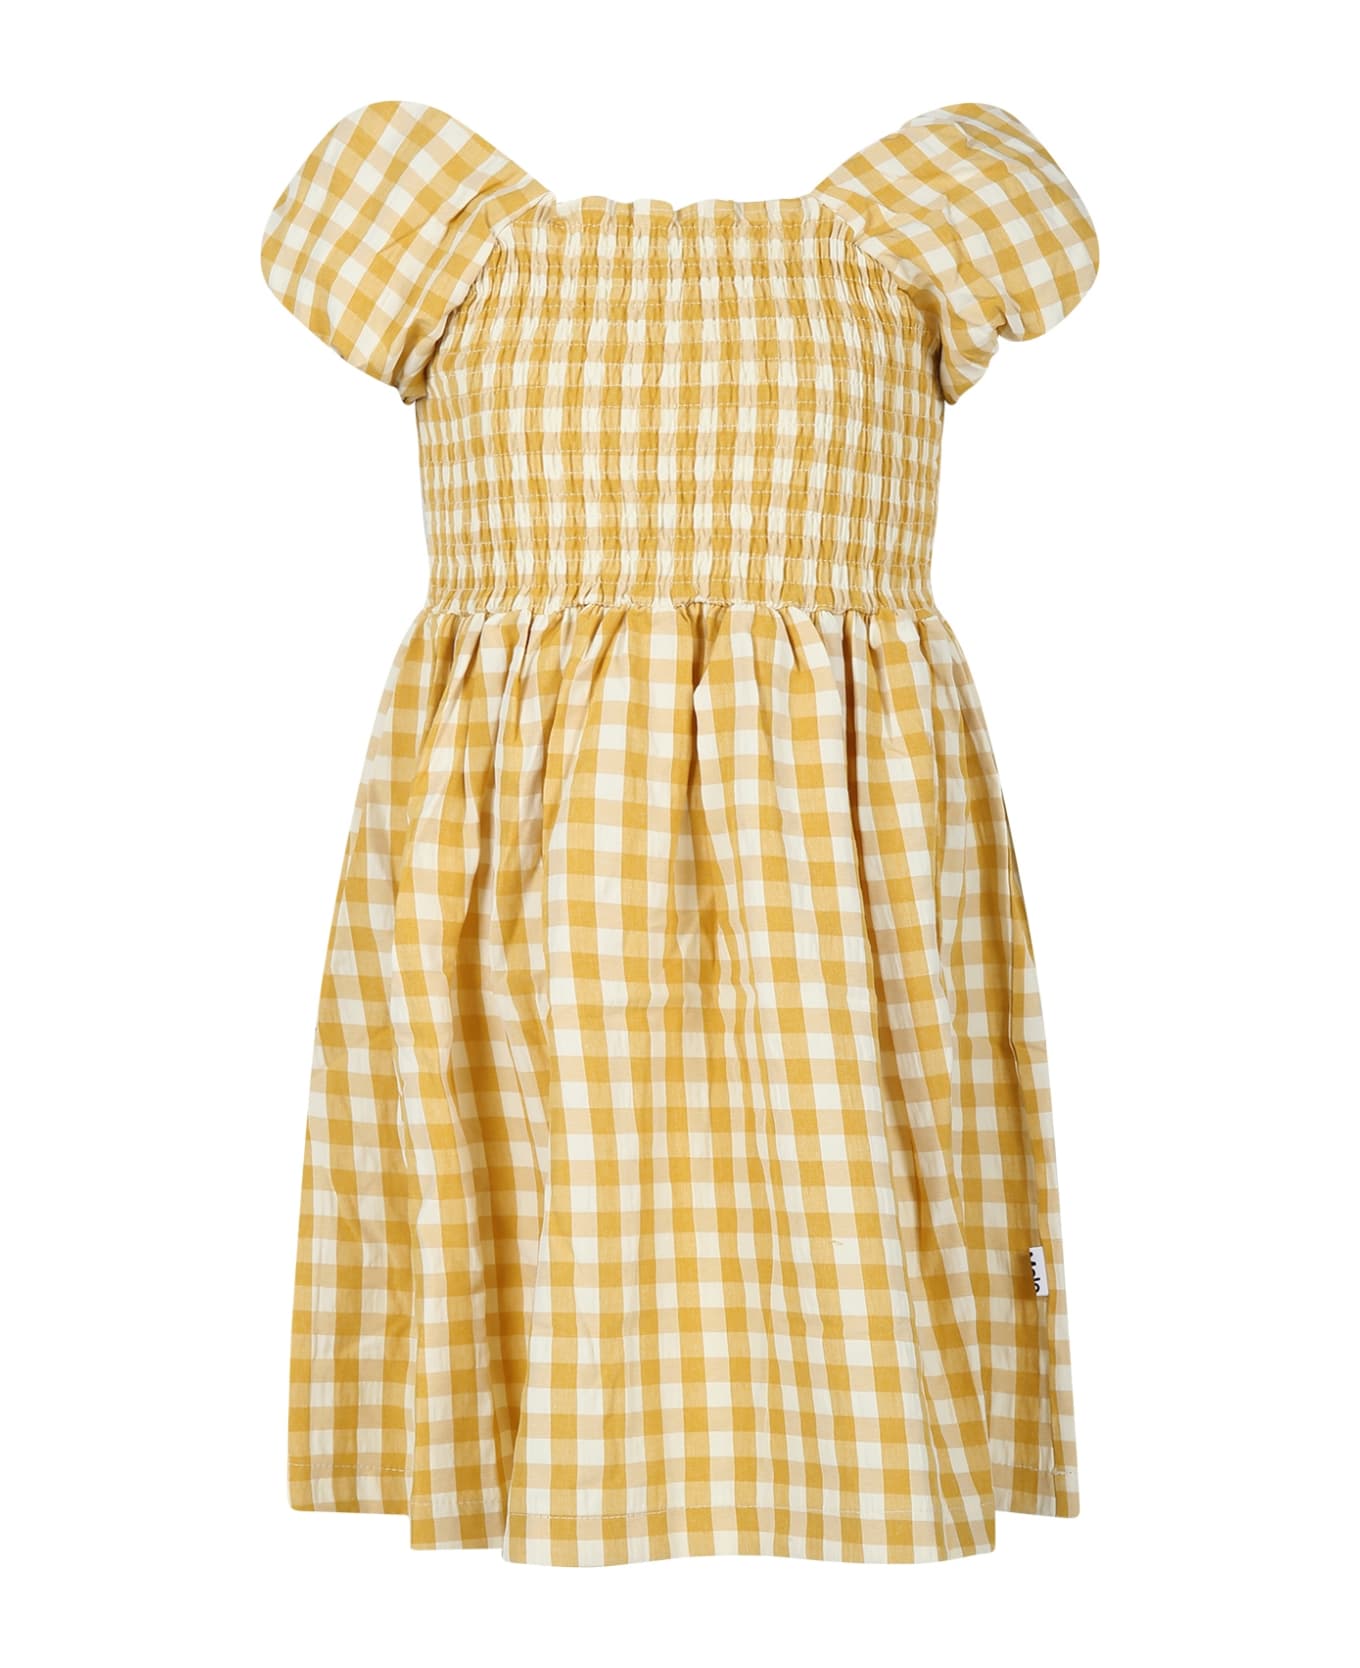 Molo Casual Yellow Dress Cherisla For Girl - Yellow